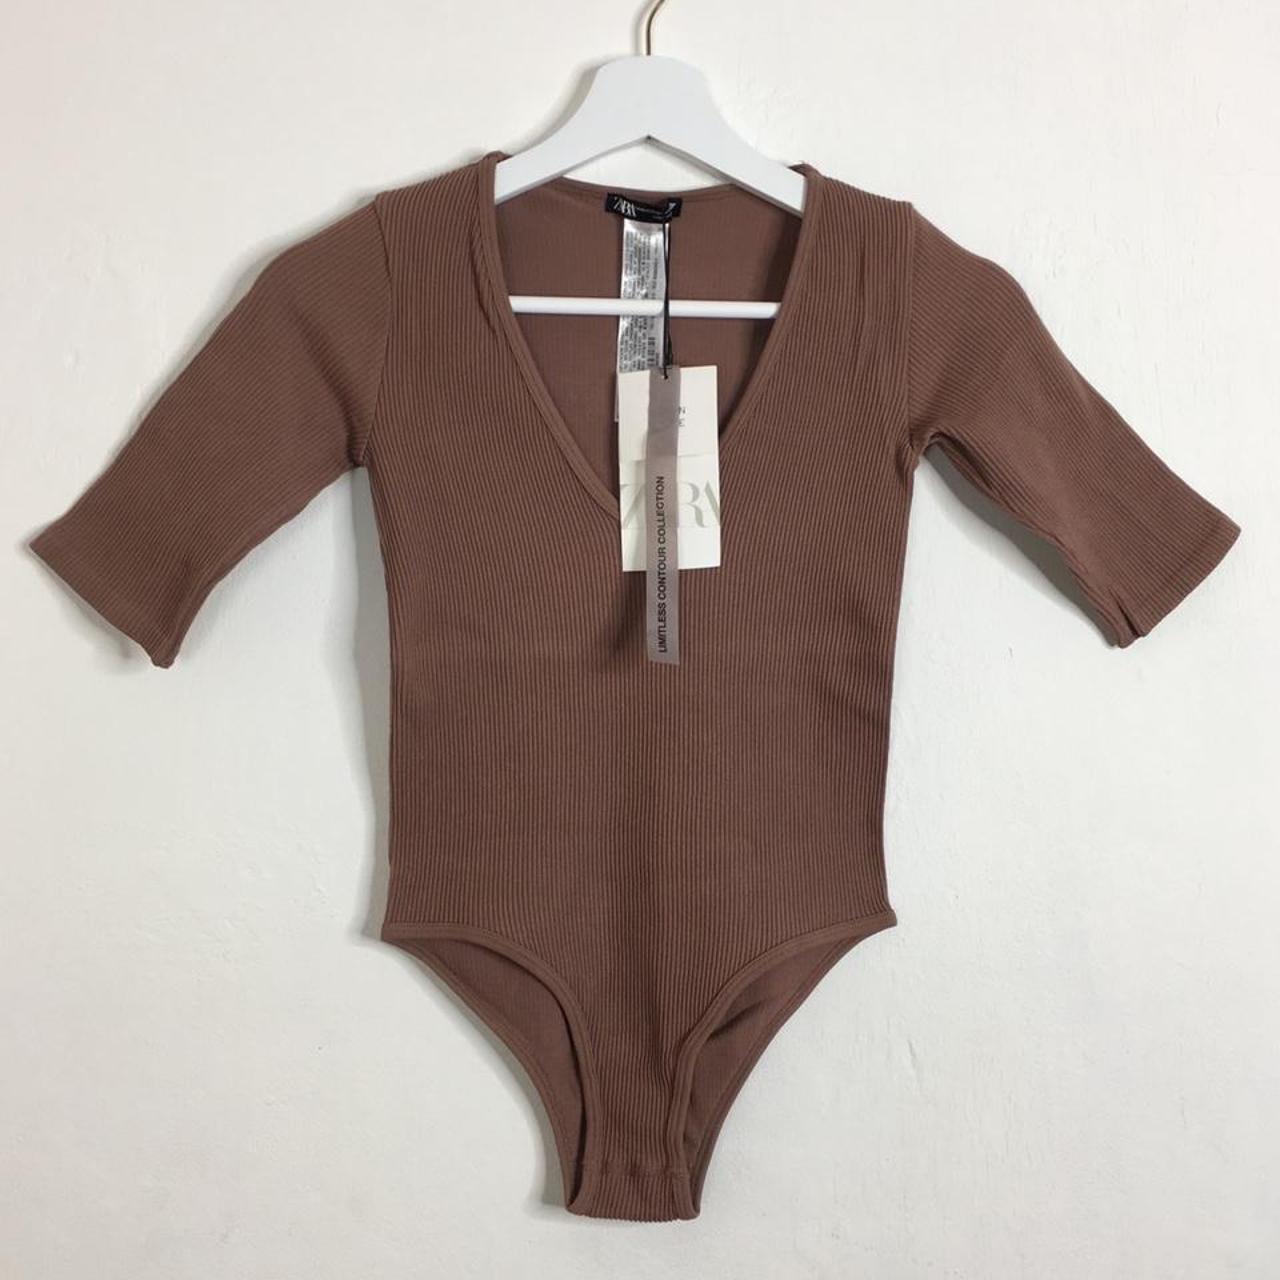 Zara limitless contour collection brown bodysuit - Depop